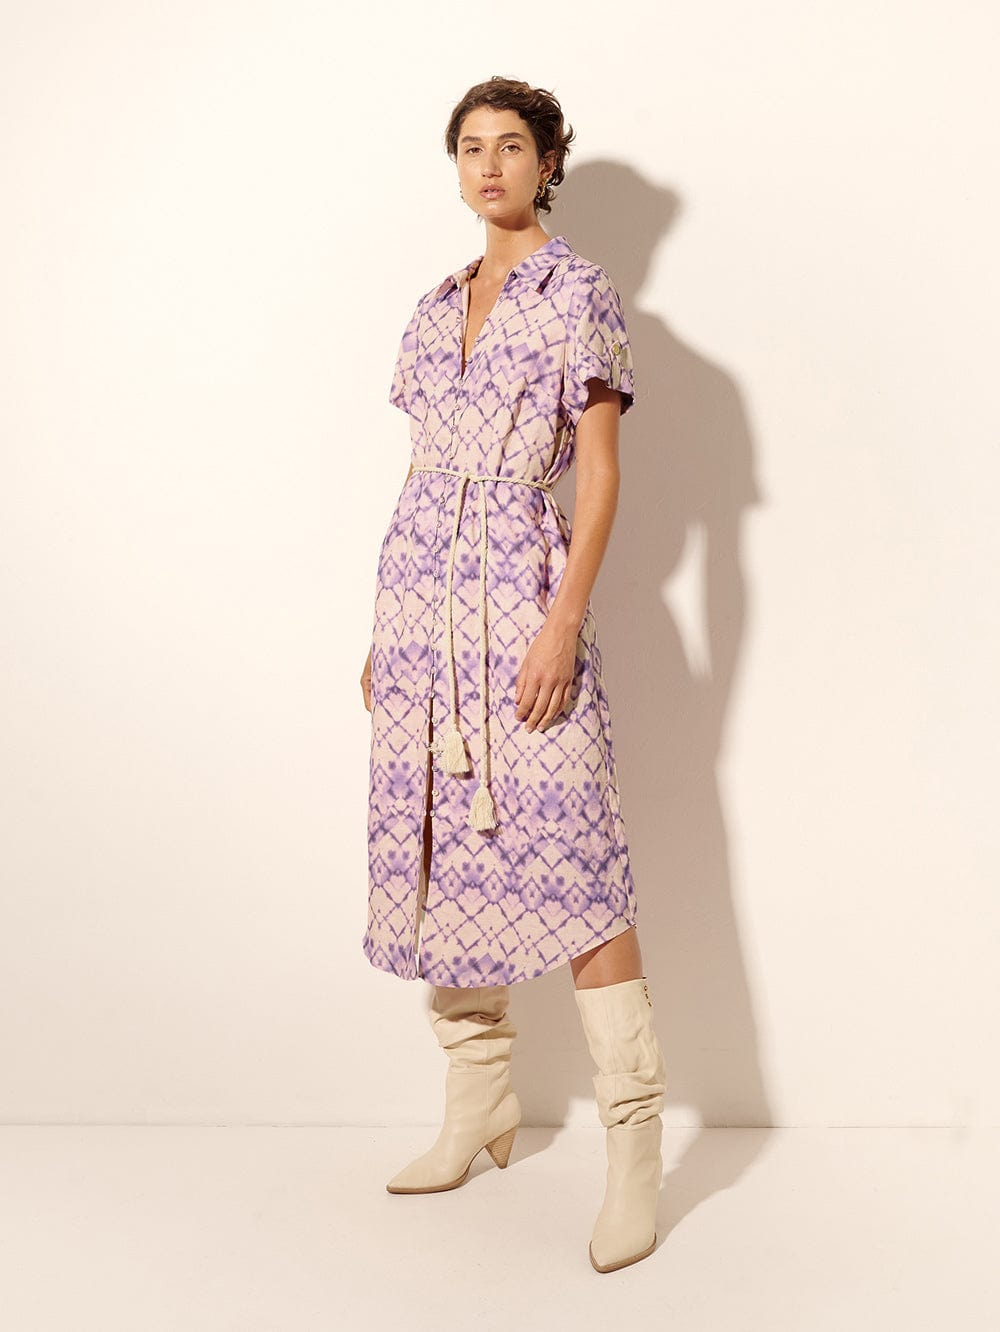 Shop Midi Dresses: Floral, Casual & More | KIVARI International